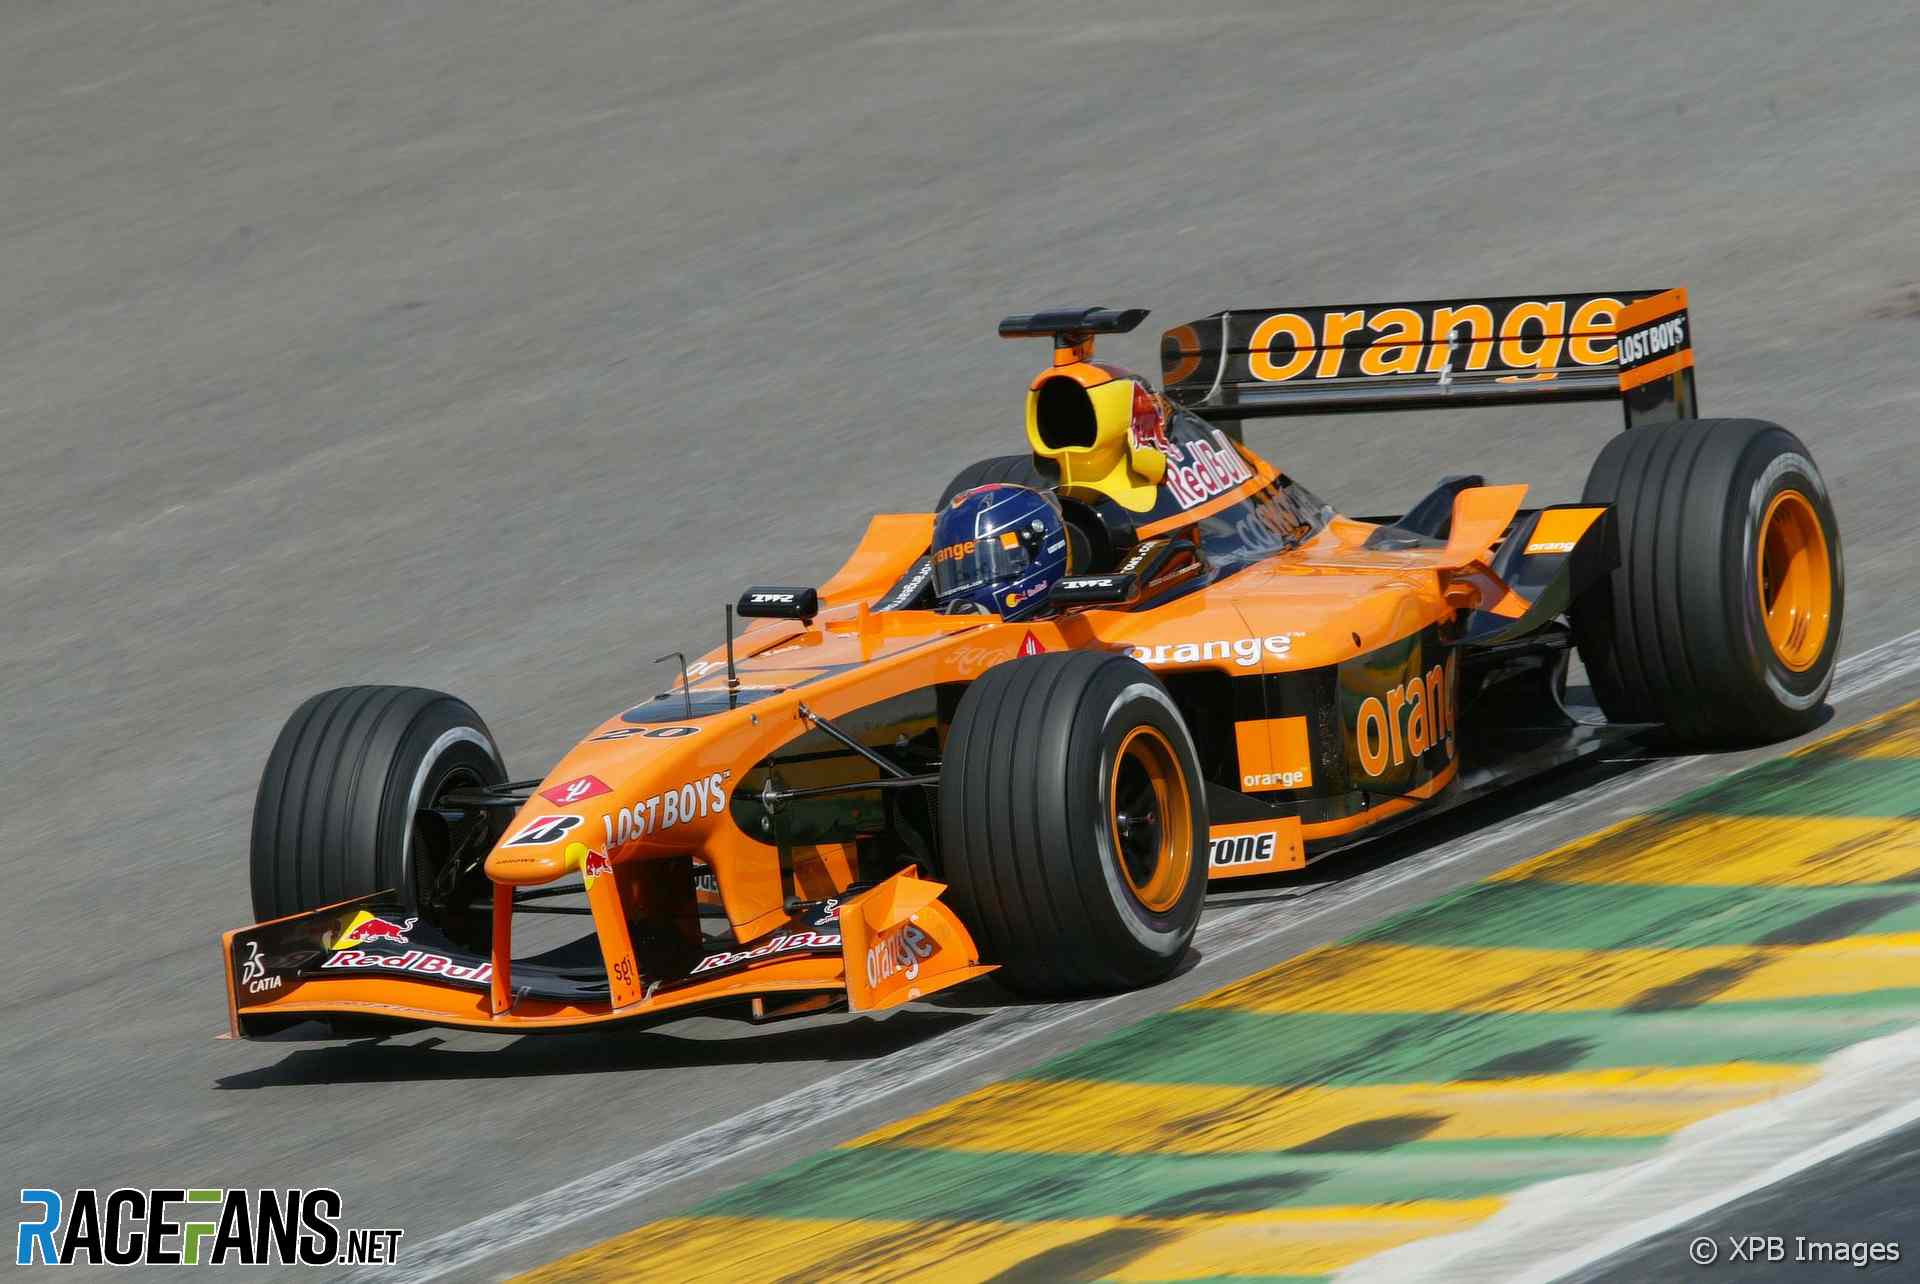 Heinz-Harald Frentzen, Arrows, Interlagos, 2002